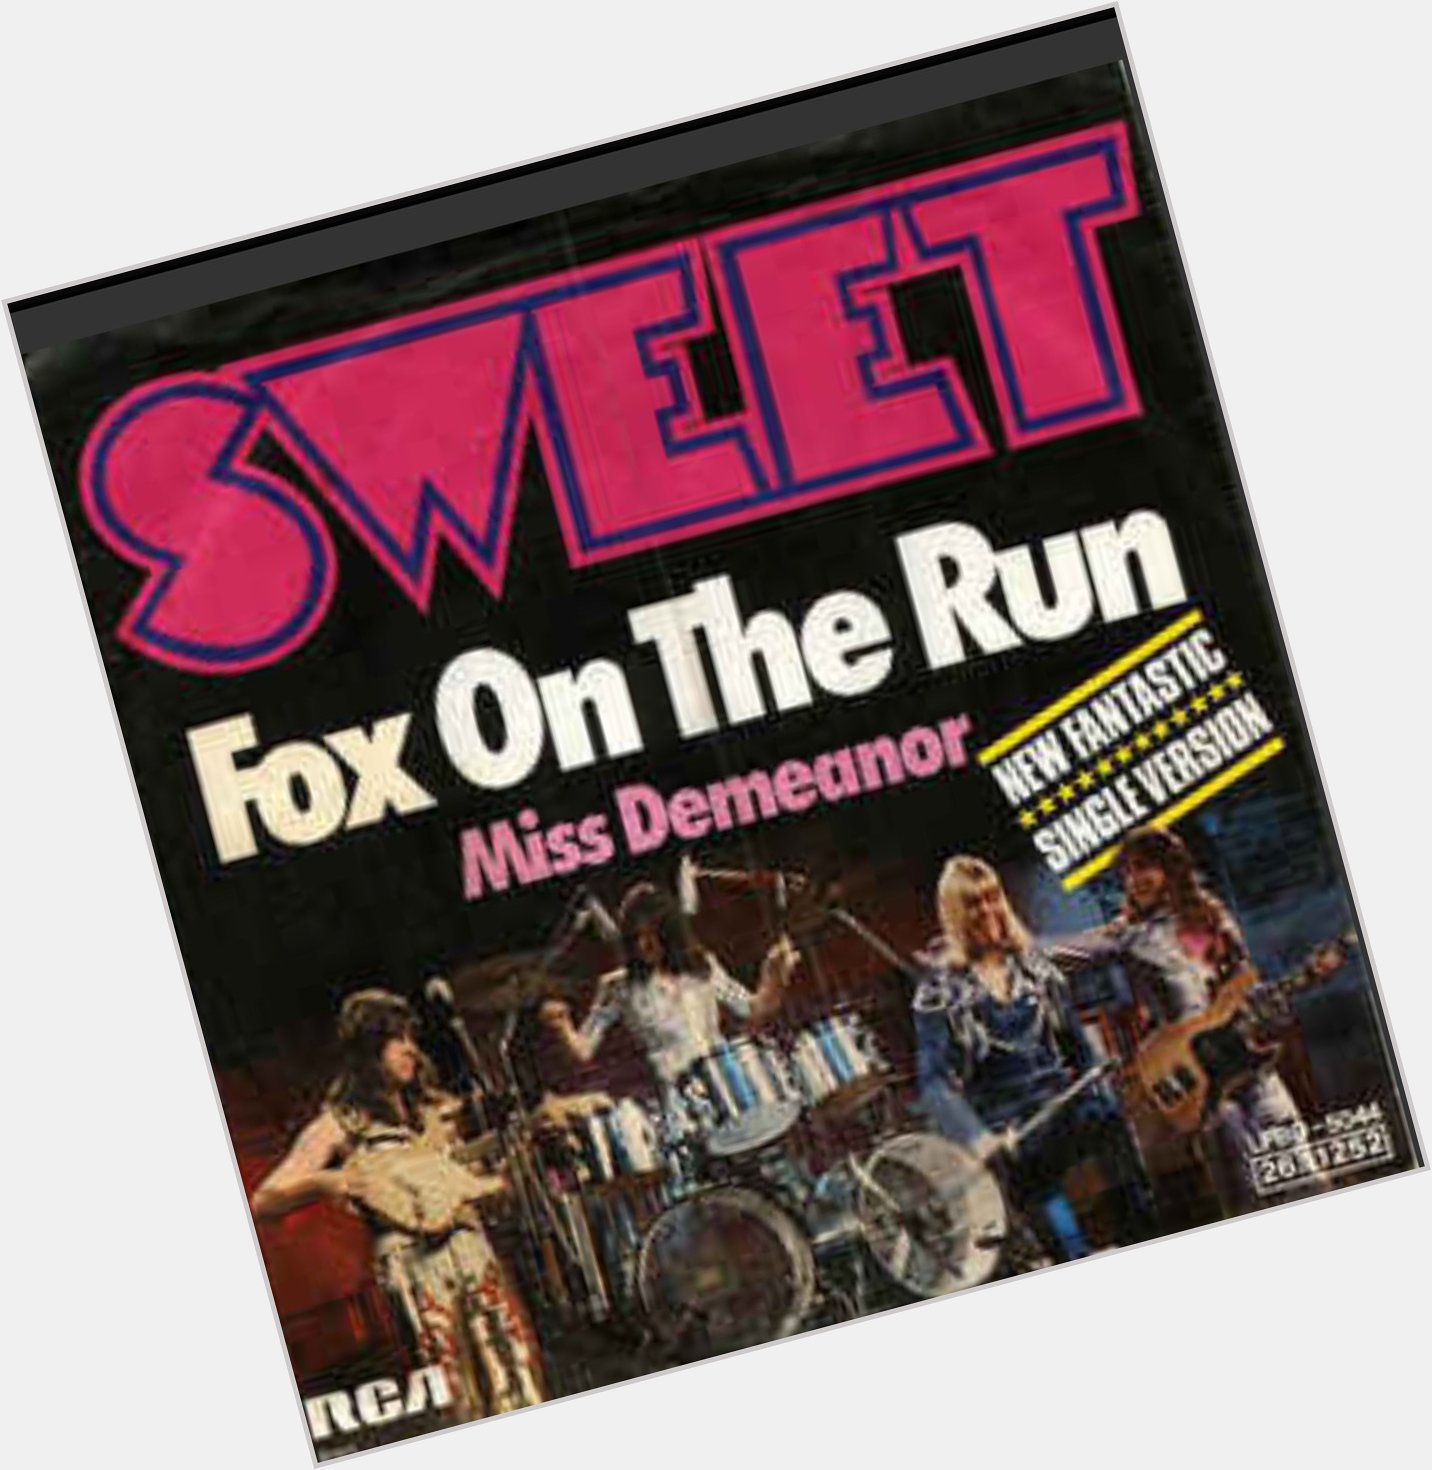 Sweet Fox On The Run from Desolation Blvd. Happy Birthday to surviving member Steve Priest 